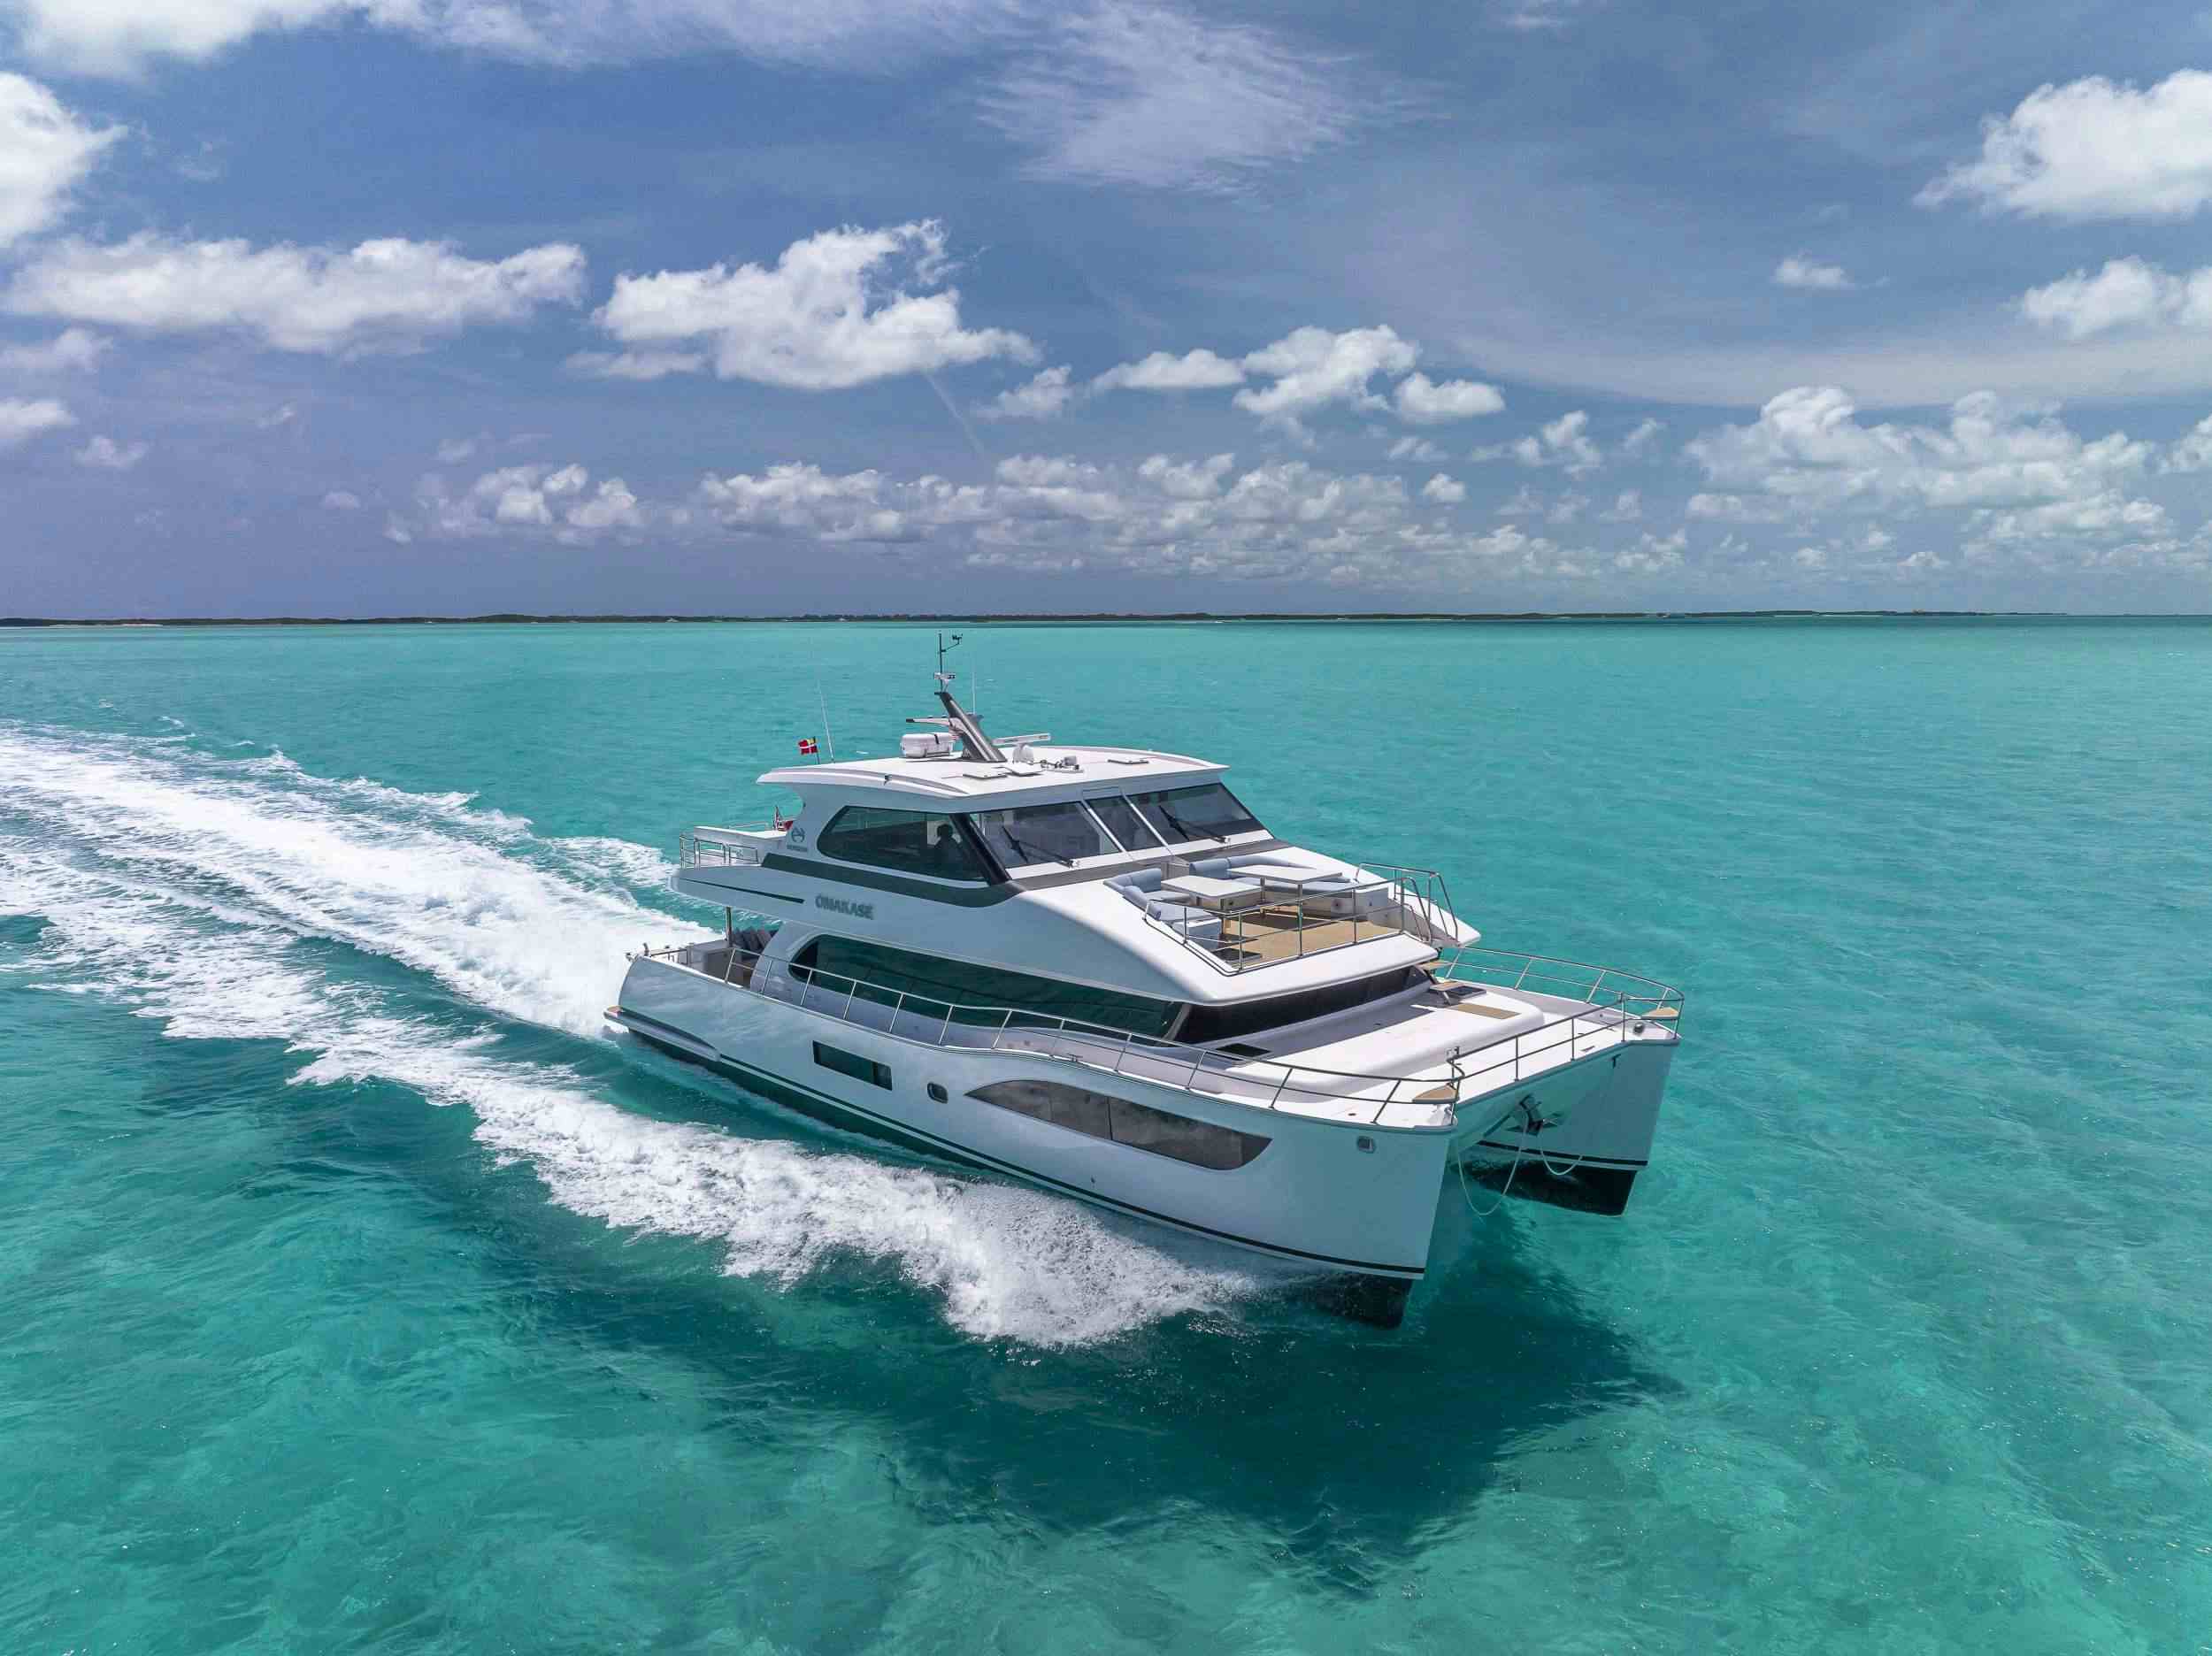 OMAKASE - Yacht Charter St Martin & Boat hire in Bahamas & Caribbean 1